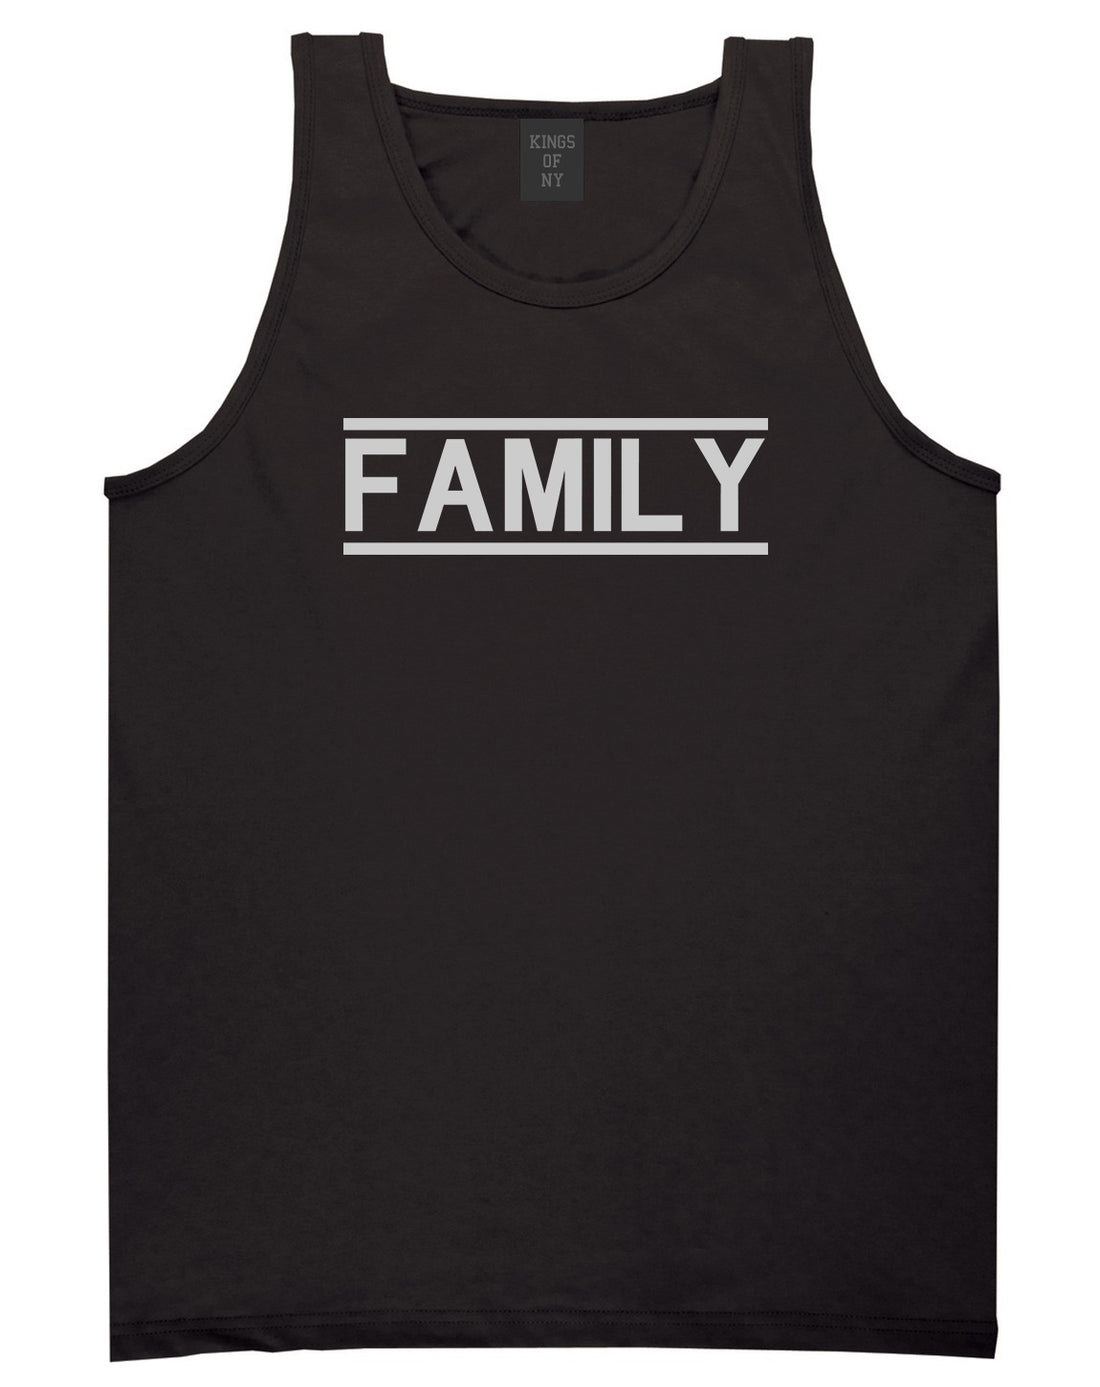 Family Fam Squad Mens Black Tank Top Shirt by KINGS OF NY